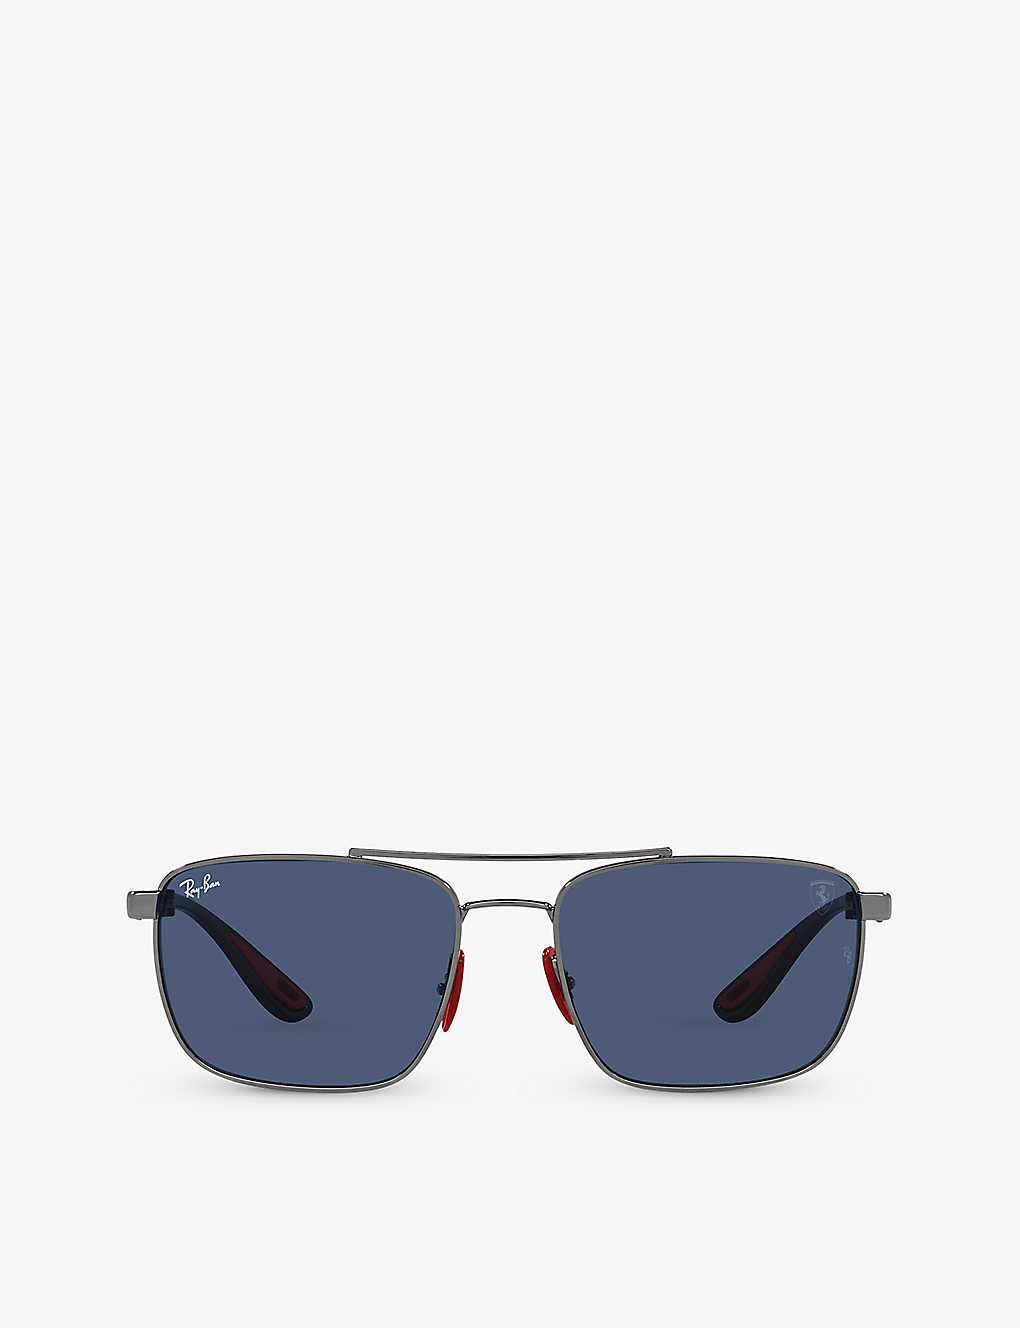 Ray Ban Rb3715m Scuderia Ferrari Collection Sunglasses Grey Frame Blue Lenses 58-18